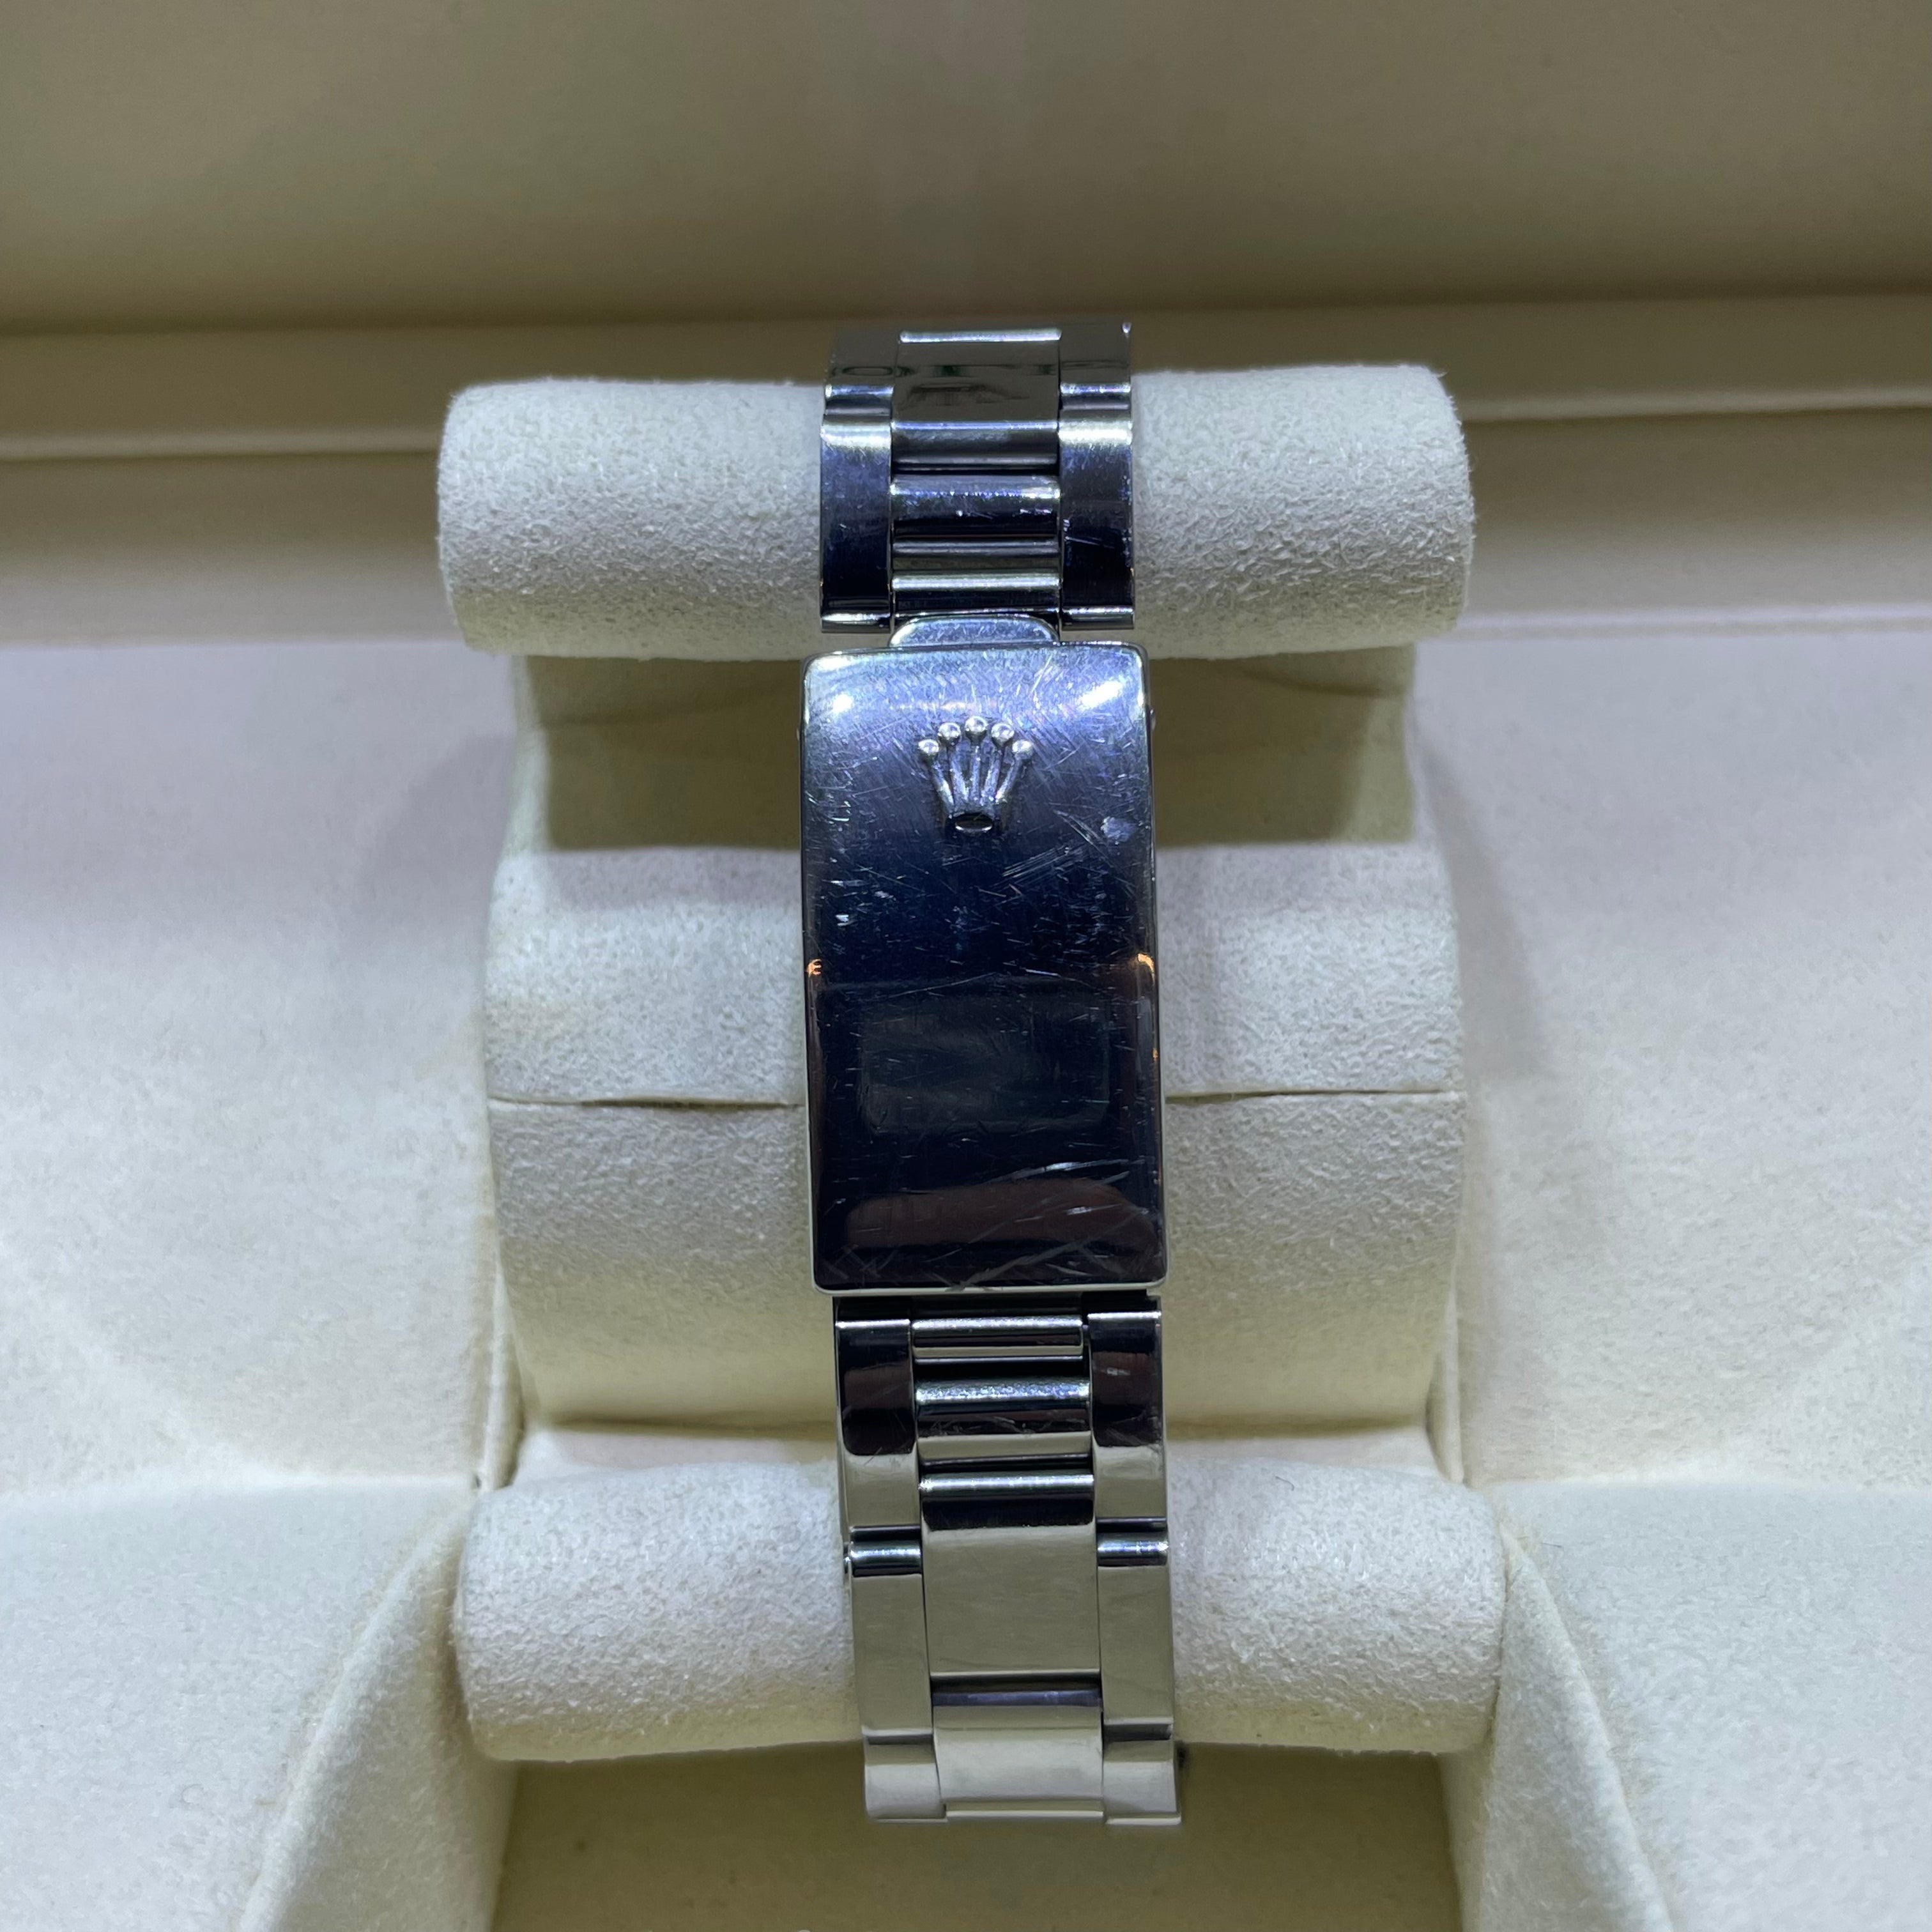 Men's Diamond Watch Rolex Datejust 36mm Blue Dial